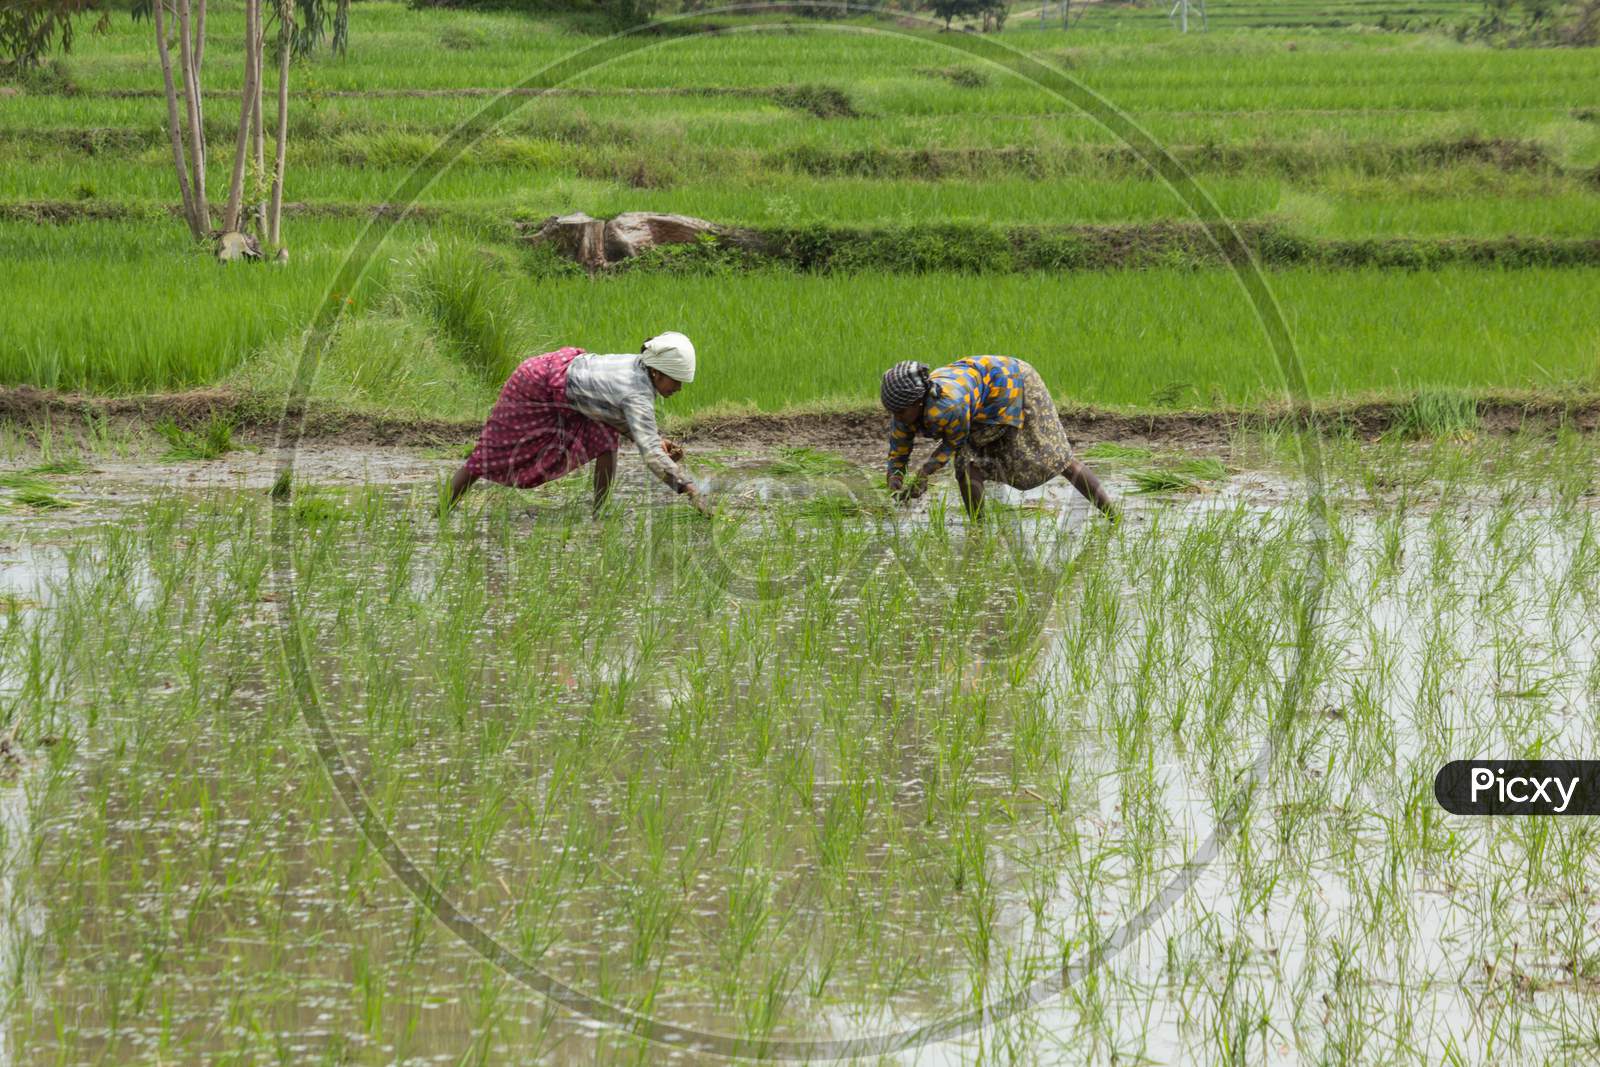 Lady farmers planting the Paddy seedlings near Mysore/Karnataka/India.